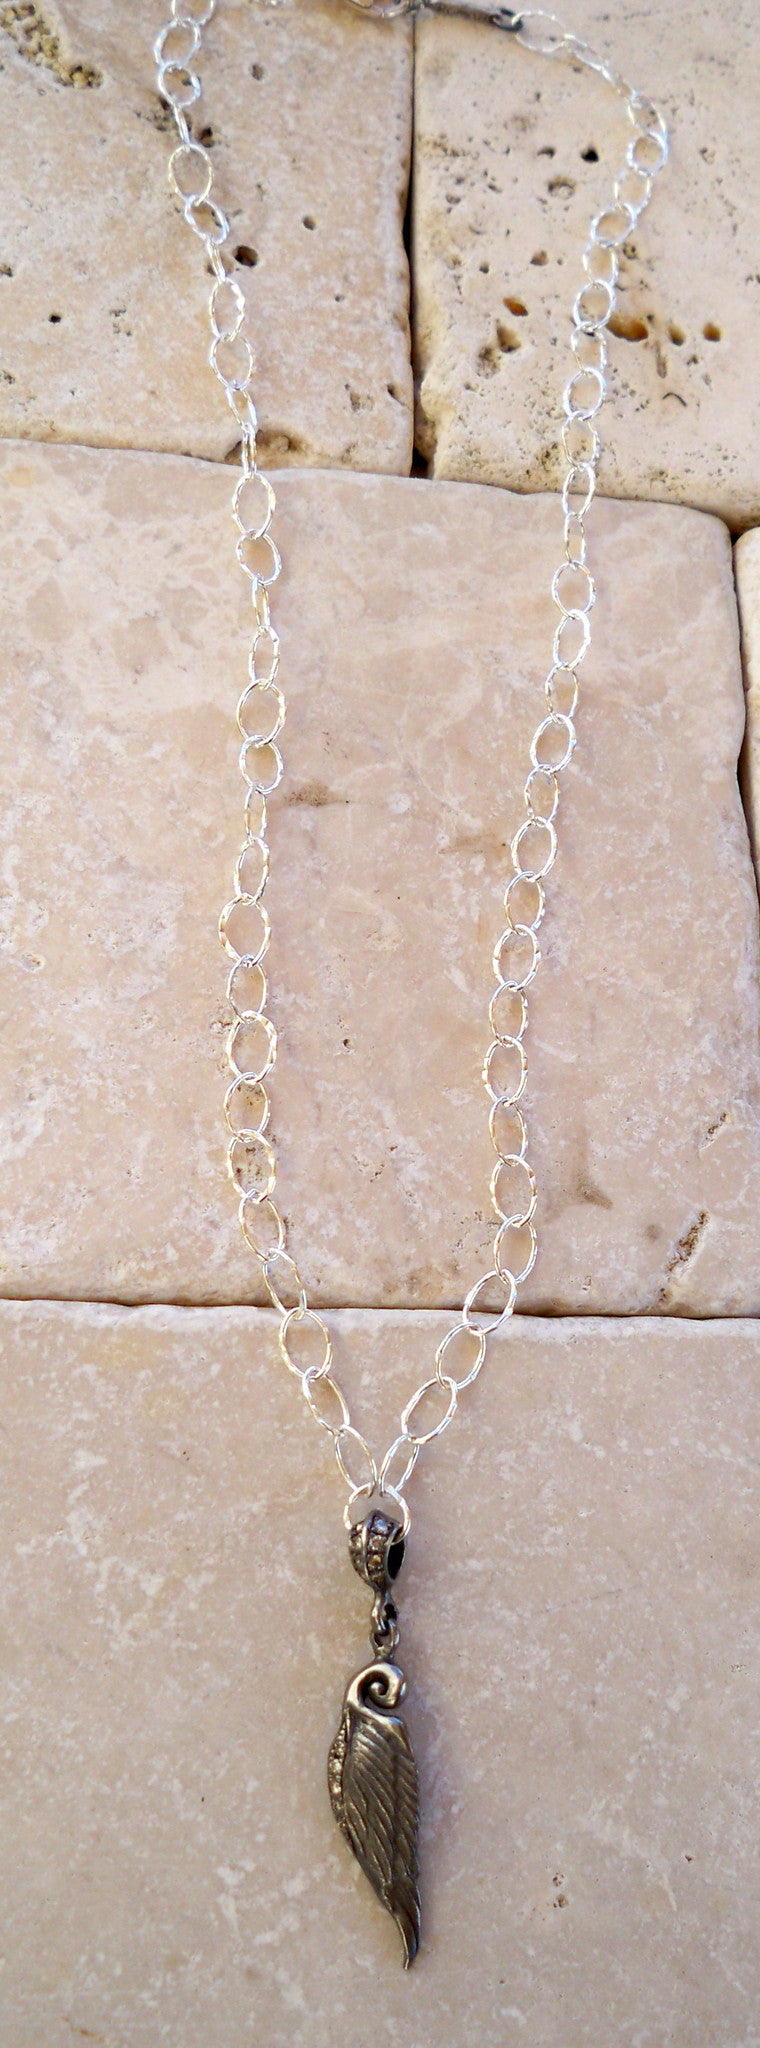 Silver Diamond Wing Necklace by Roman Paul